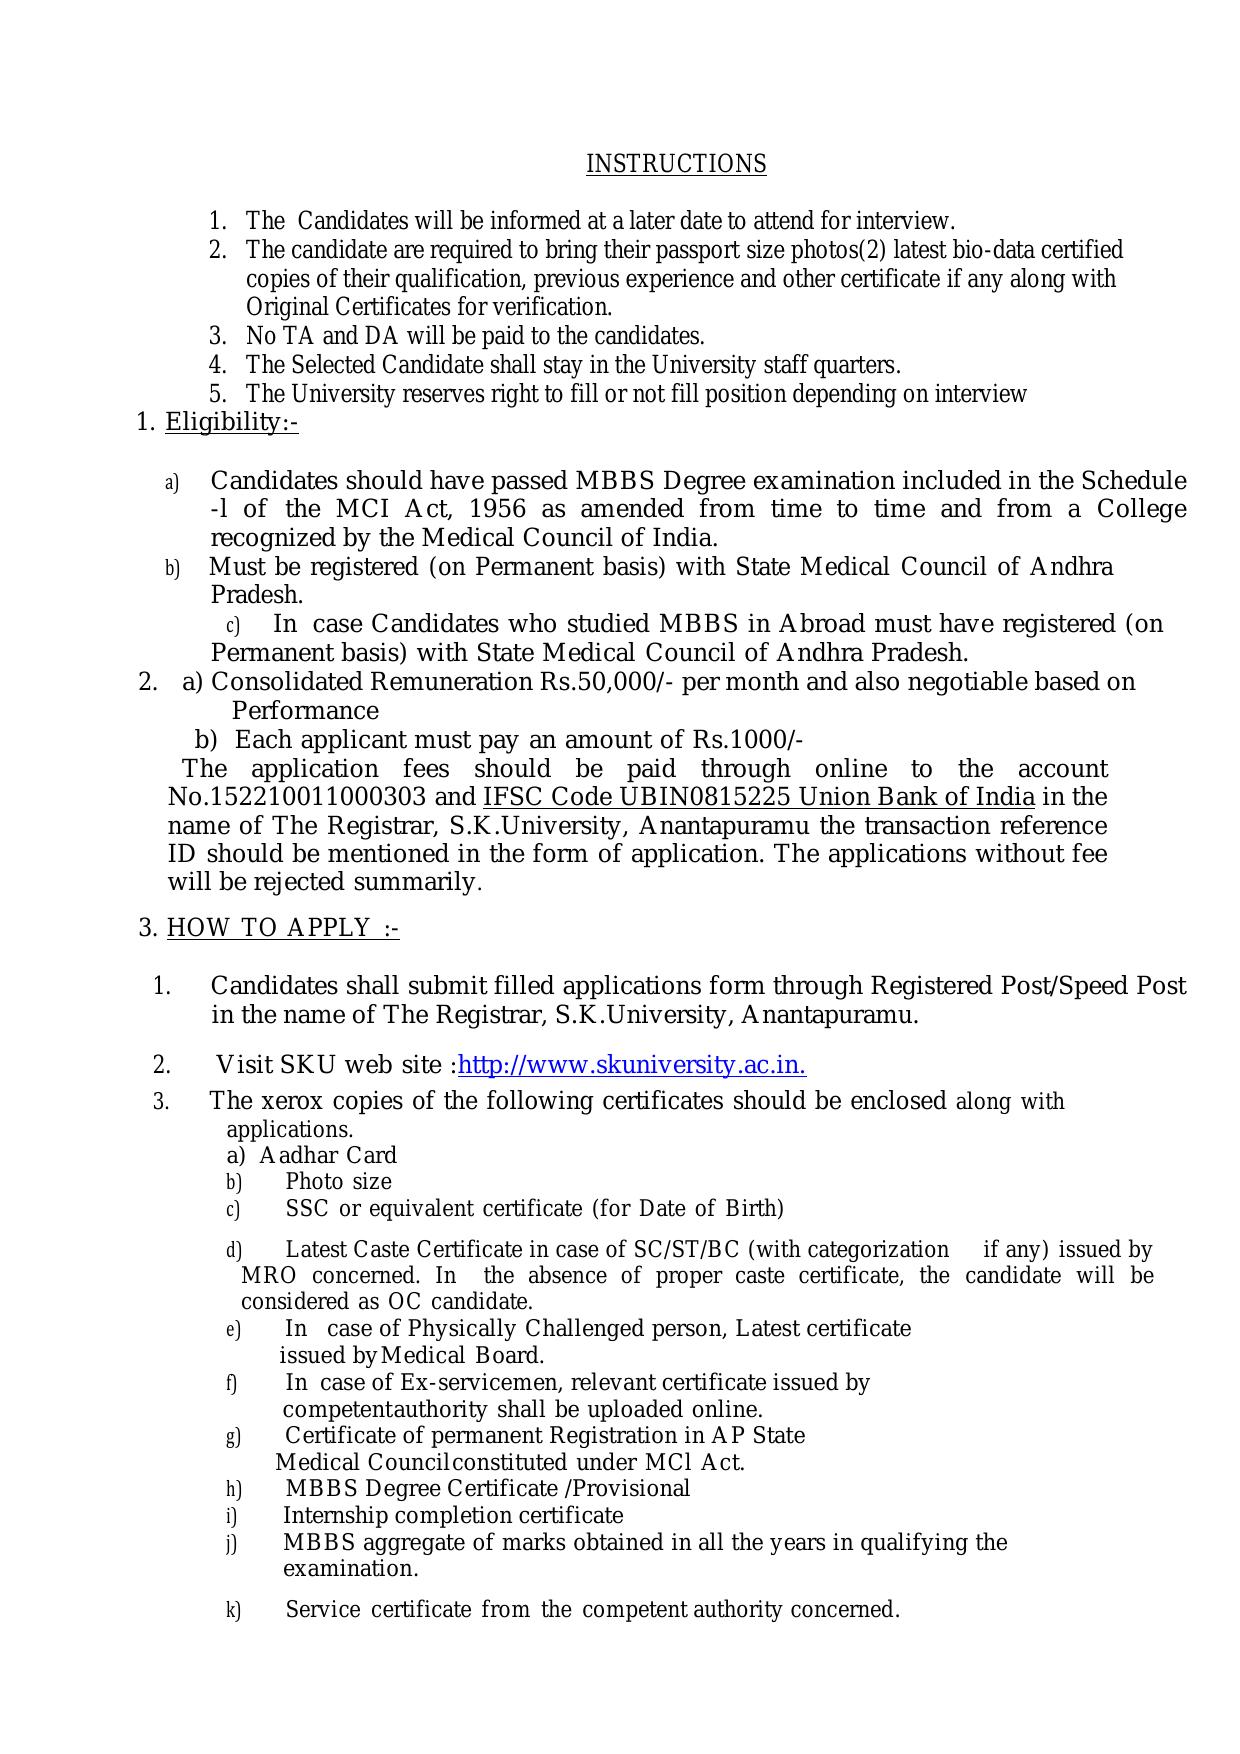 Sri Krishnadevaraya University Invites Application for Lady Medical Officer Recruitment 2023 - Page 1